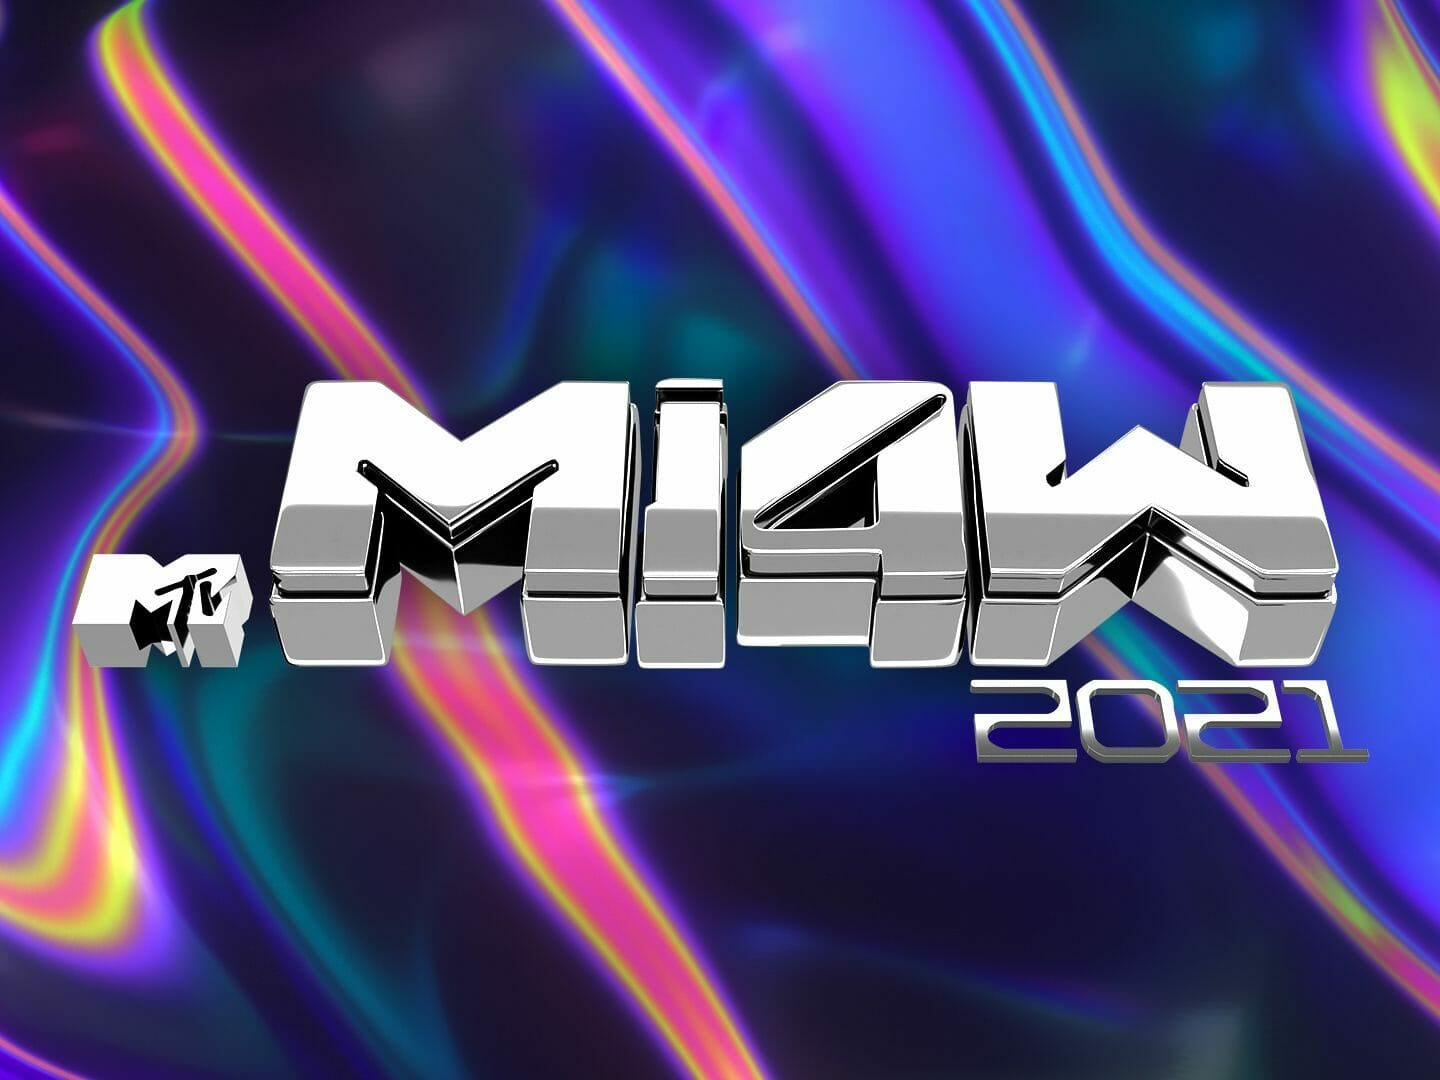 MTV MIAW 2021